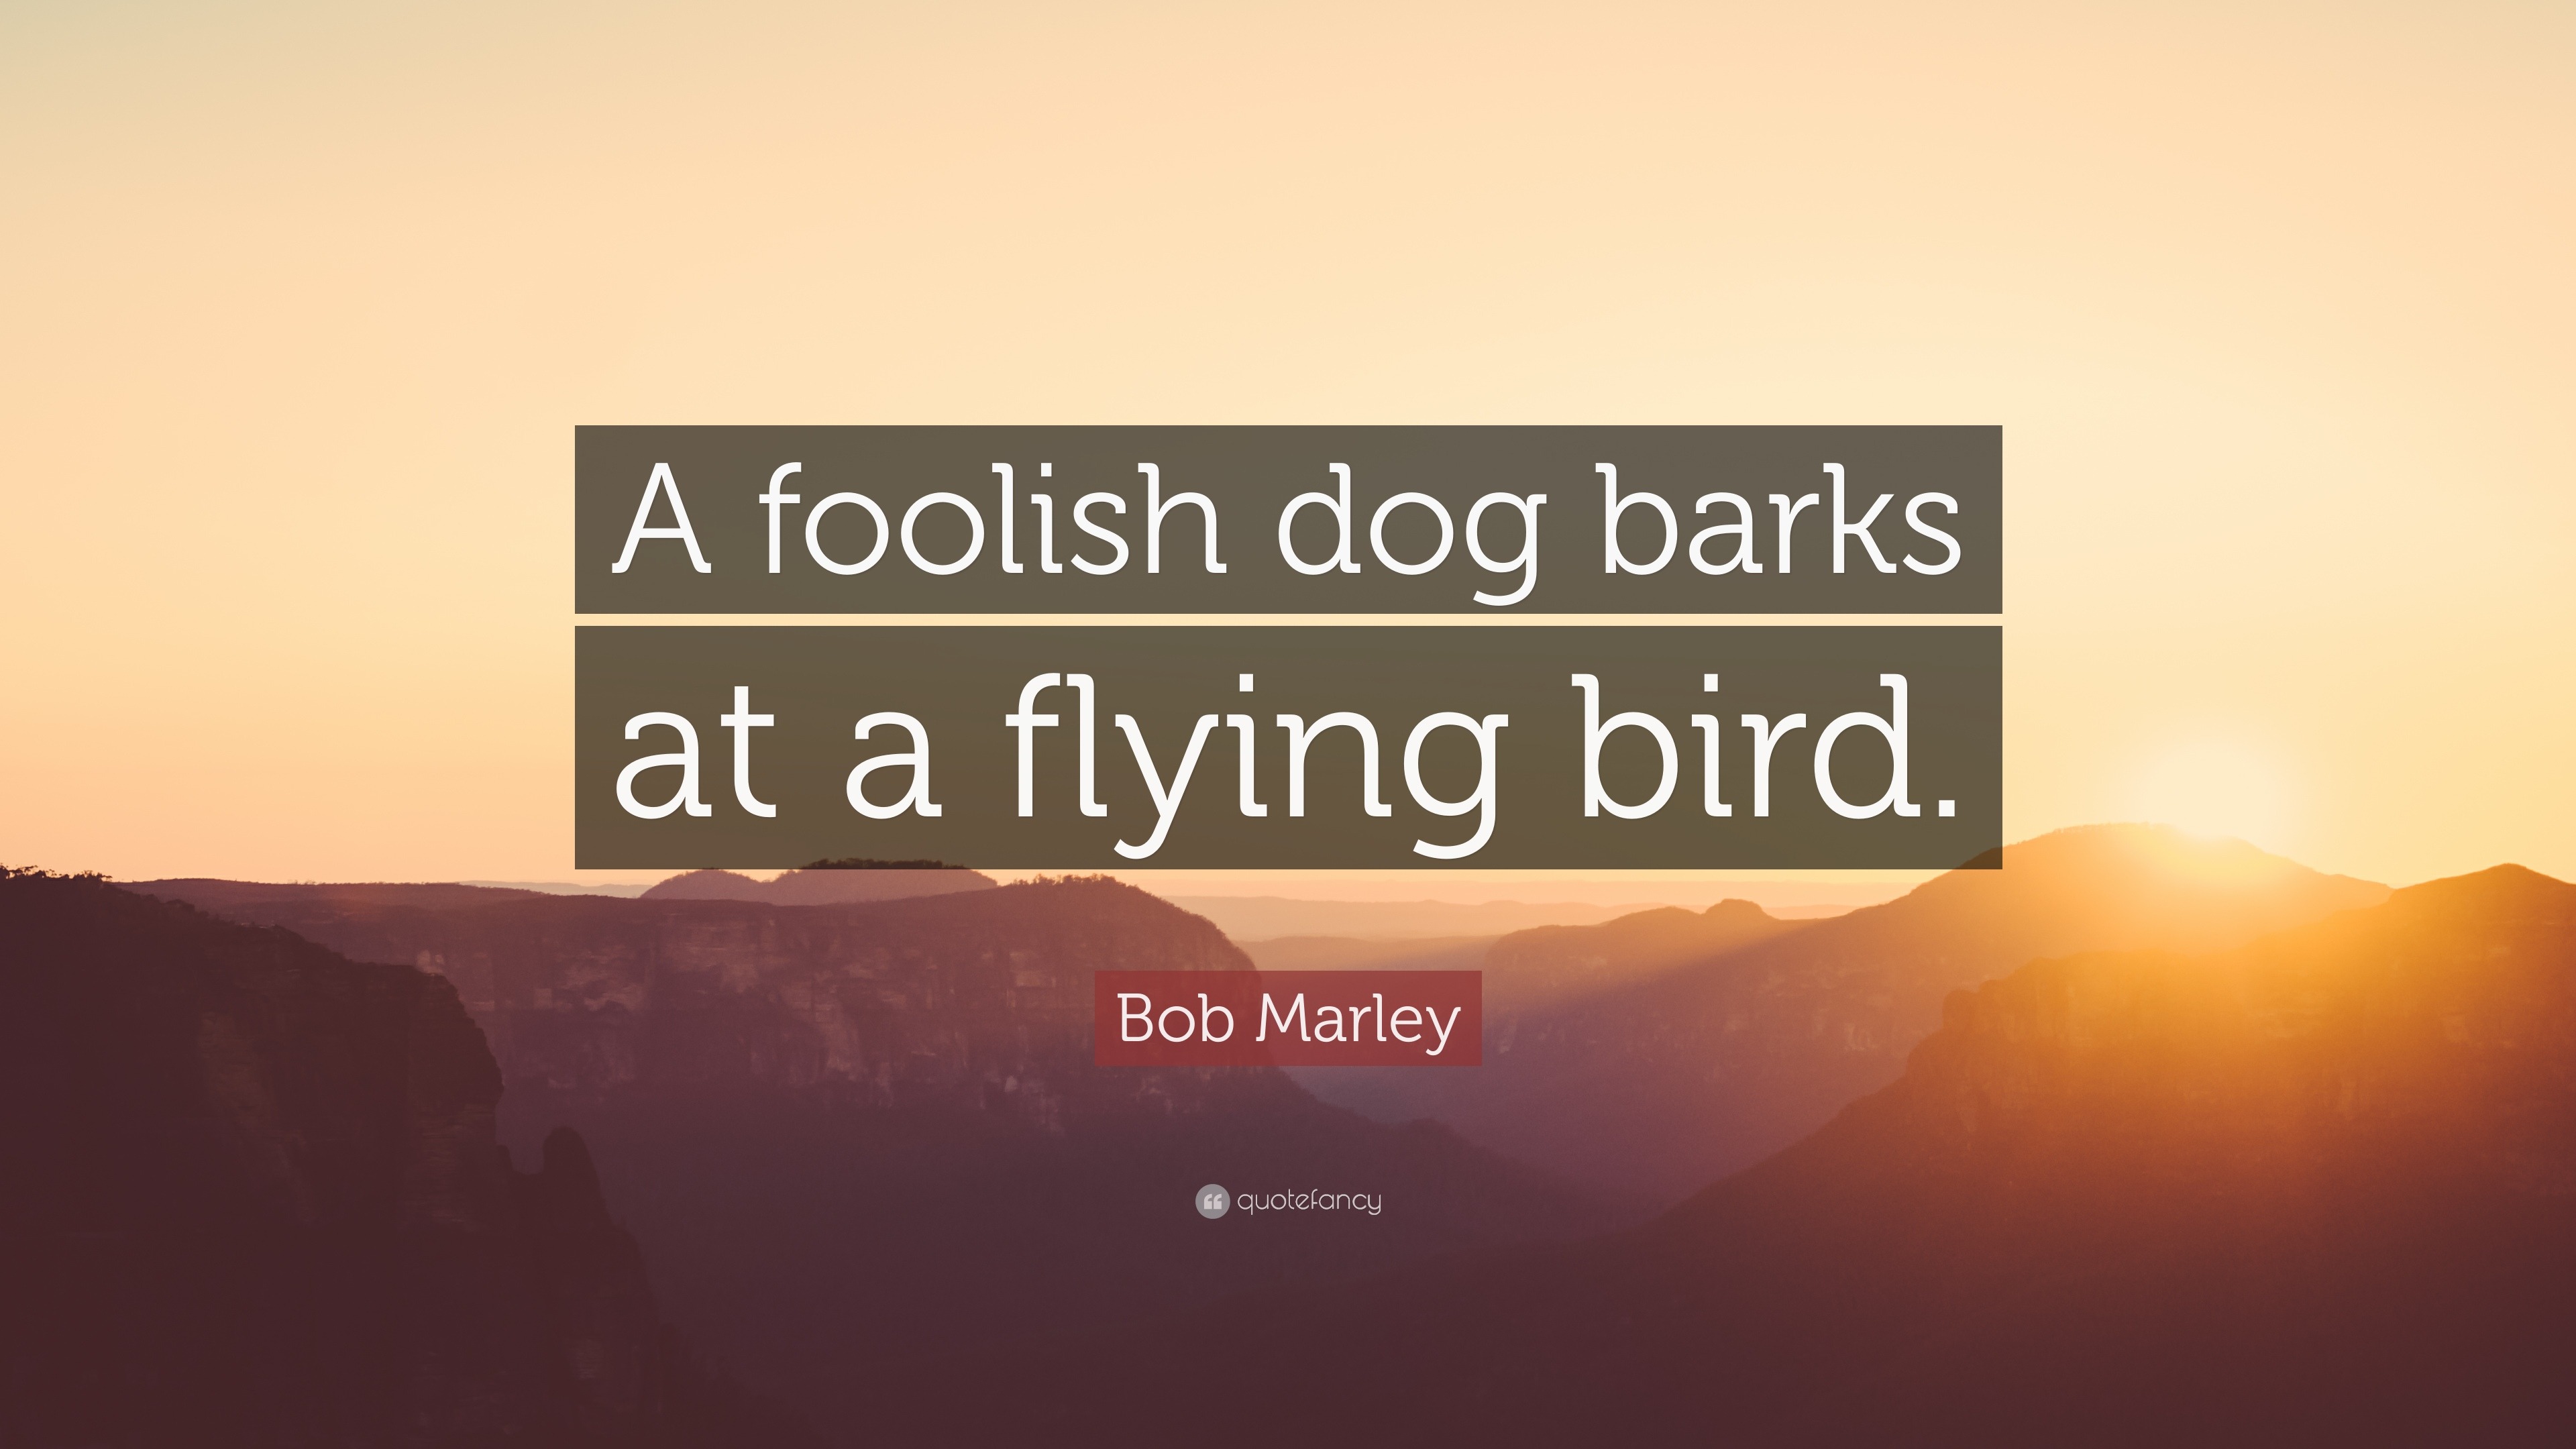 Bob Marley Quote: “A foolish dog barks at a flying bird.” (11 ...